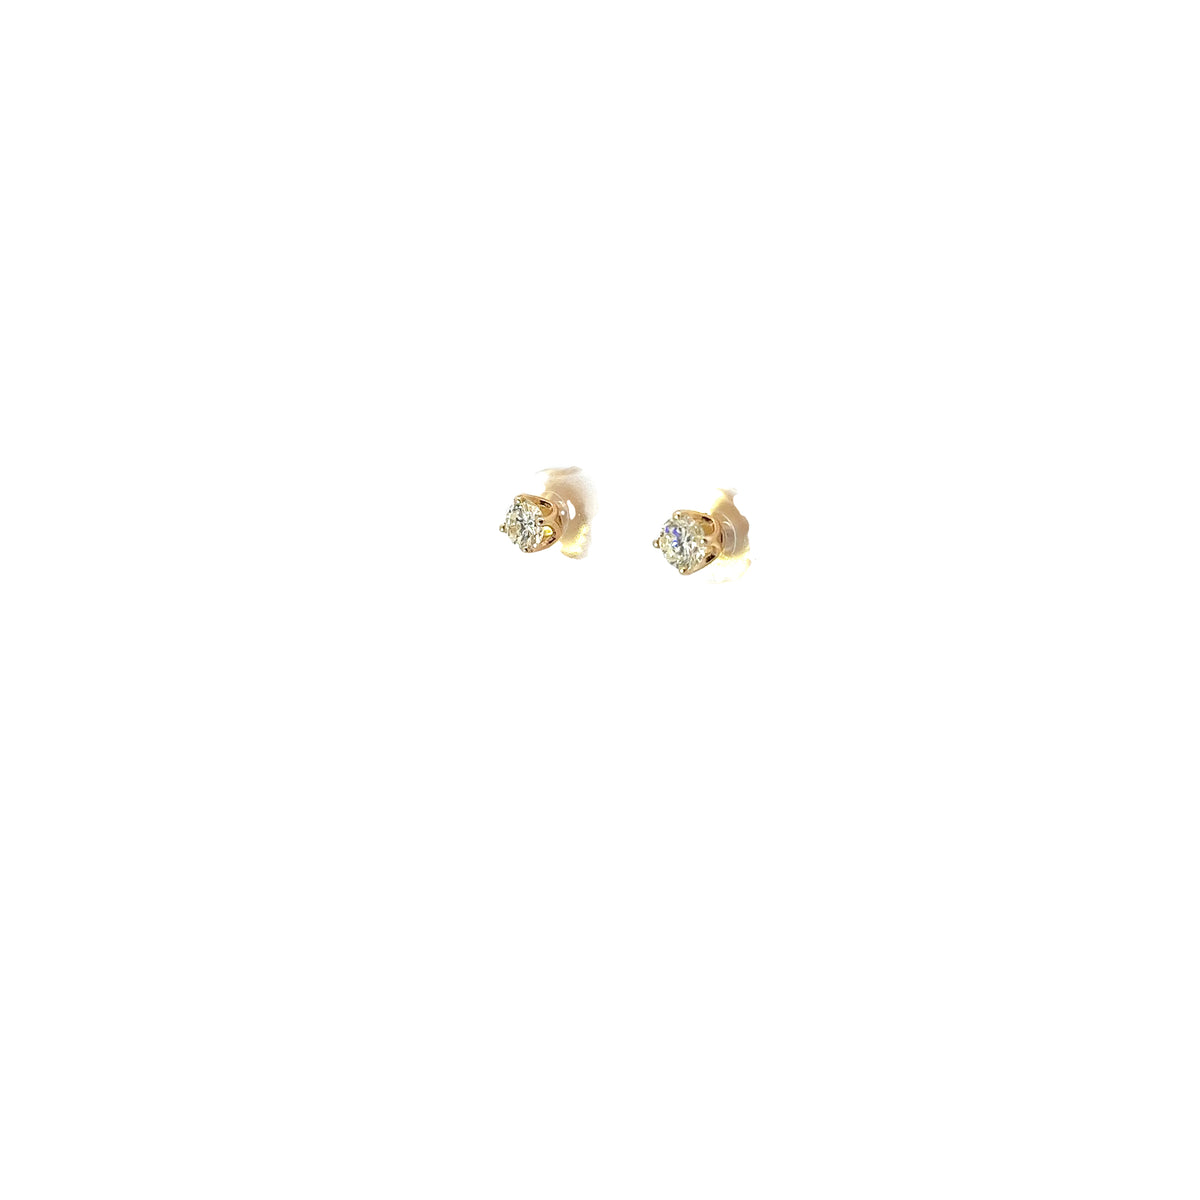 Ladies 14k yellow gold Baby Diamond Stud earrings